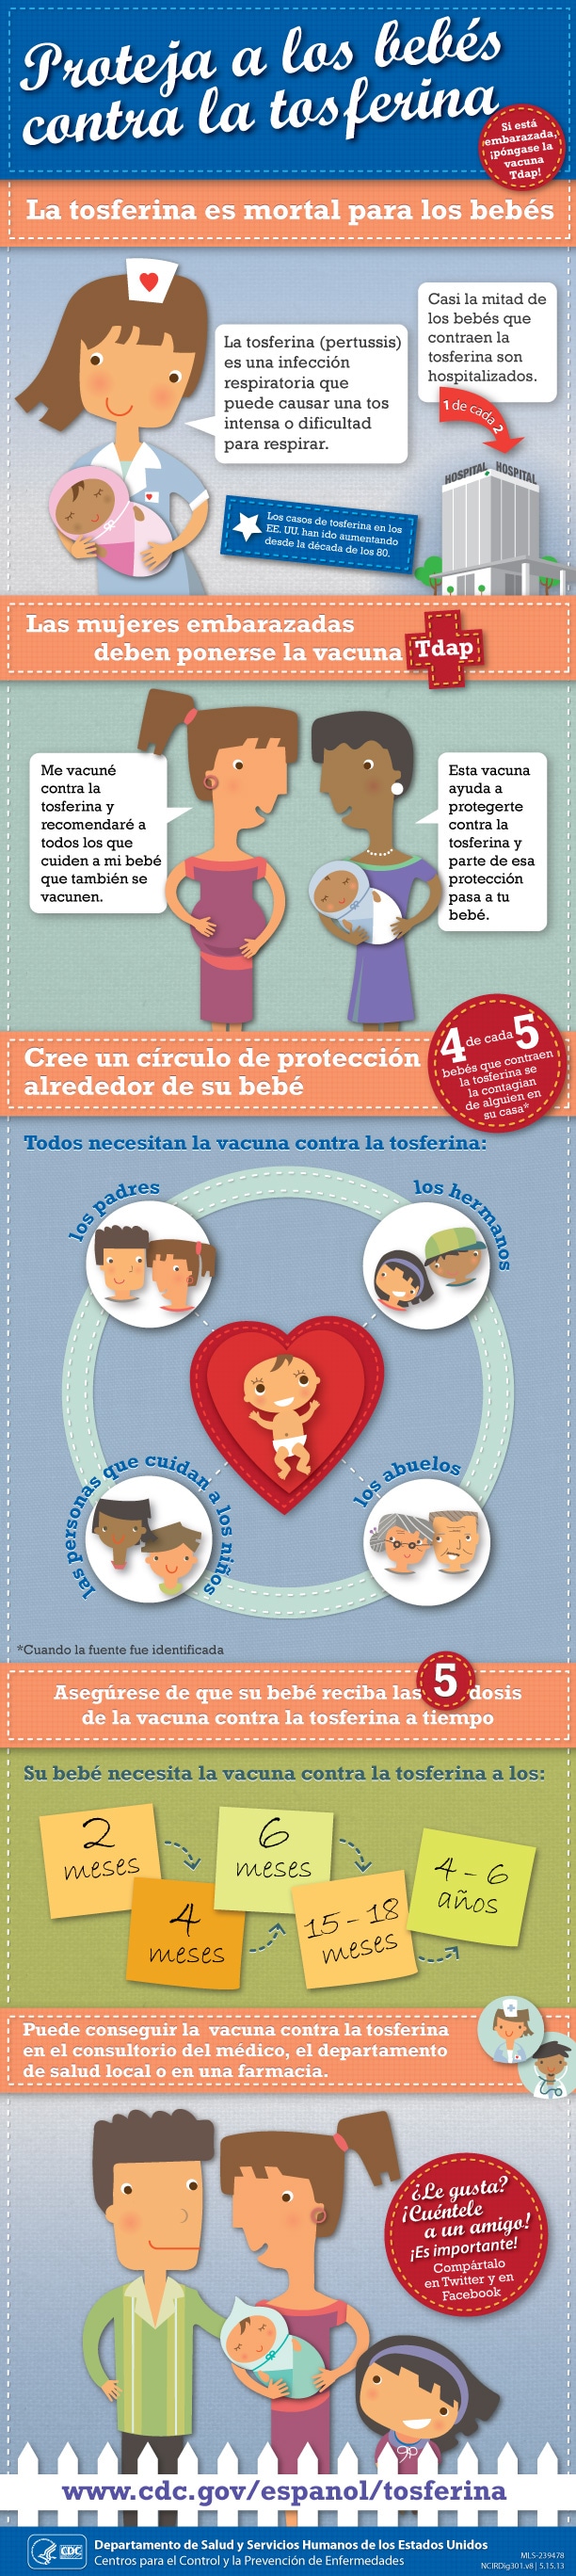 Proteja a los bebés contra la tosferina - infographic